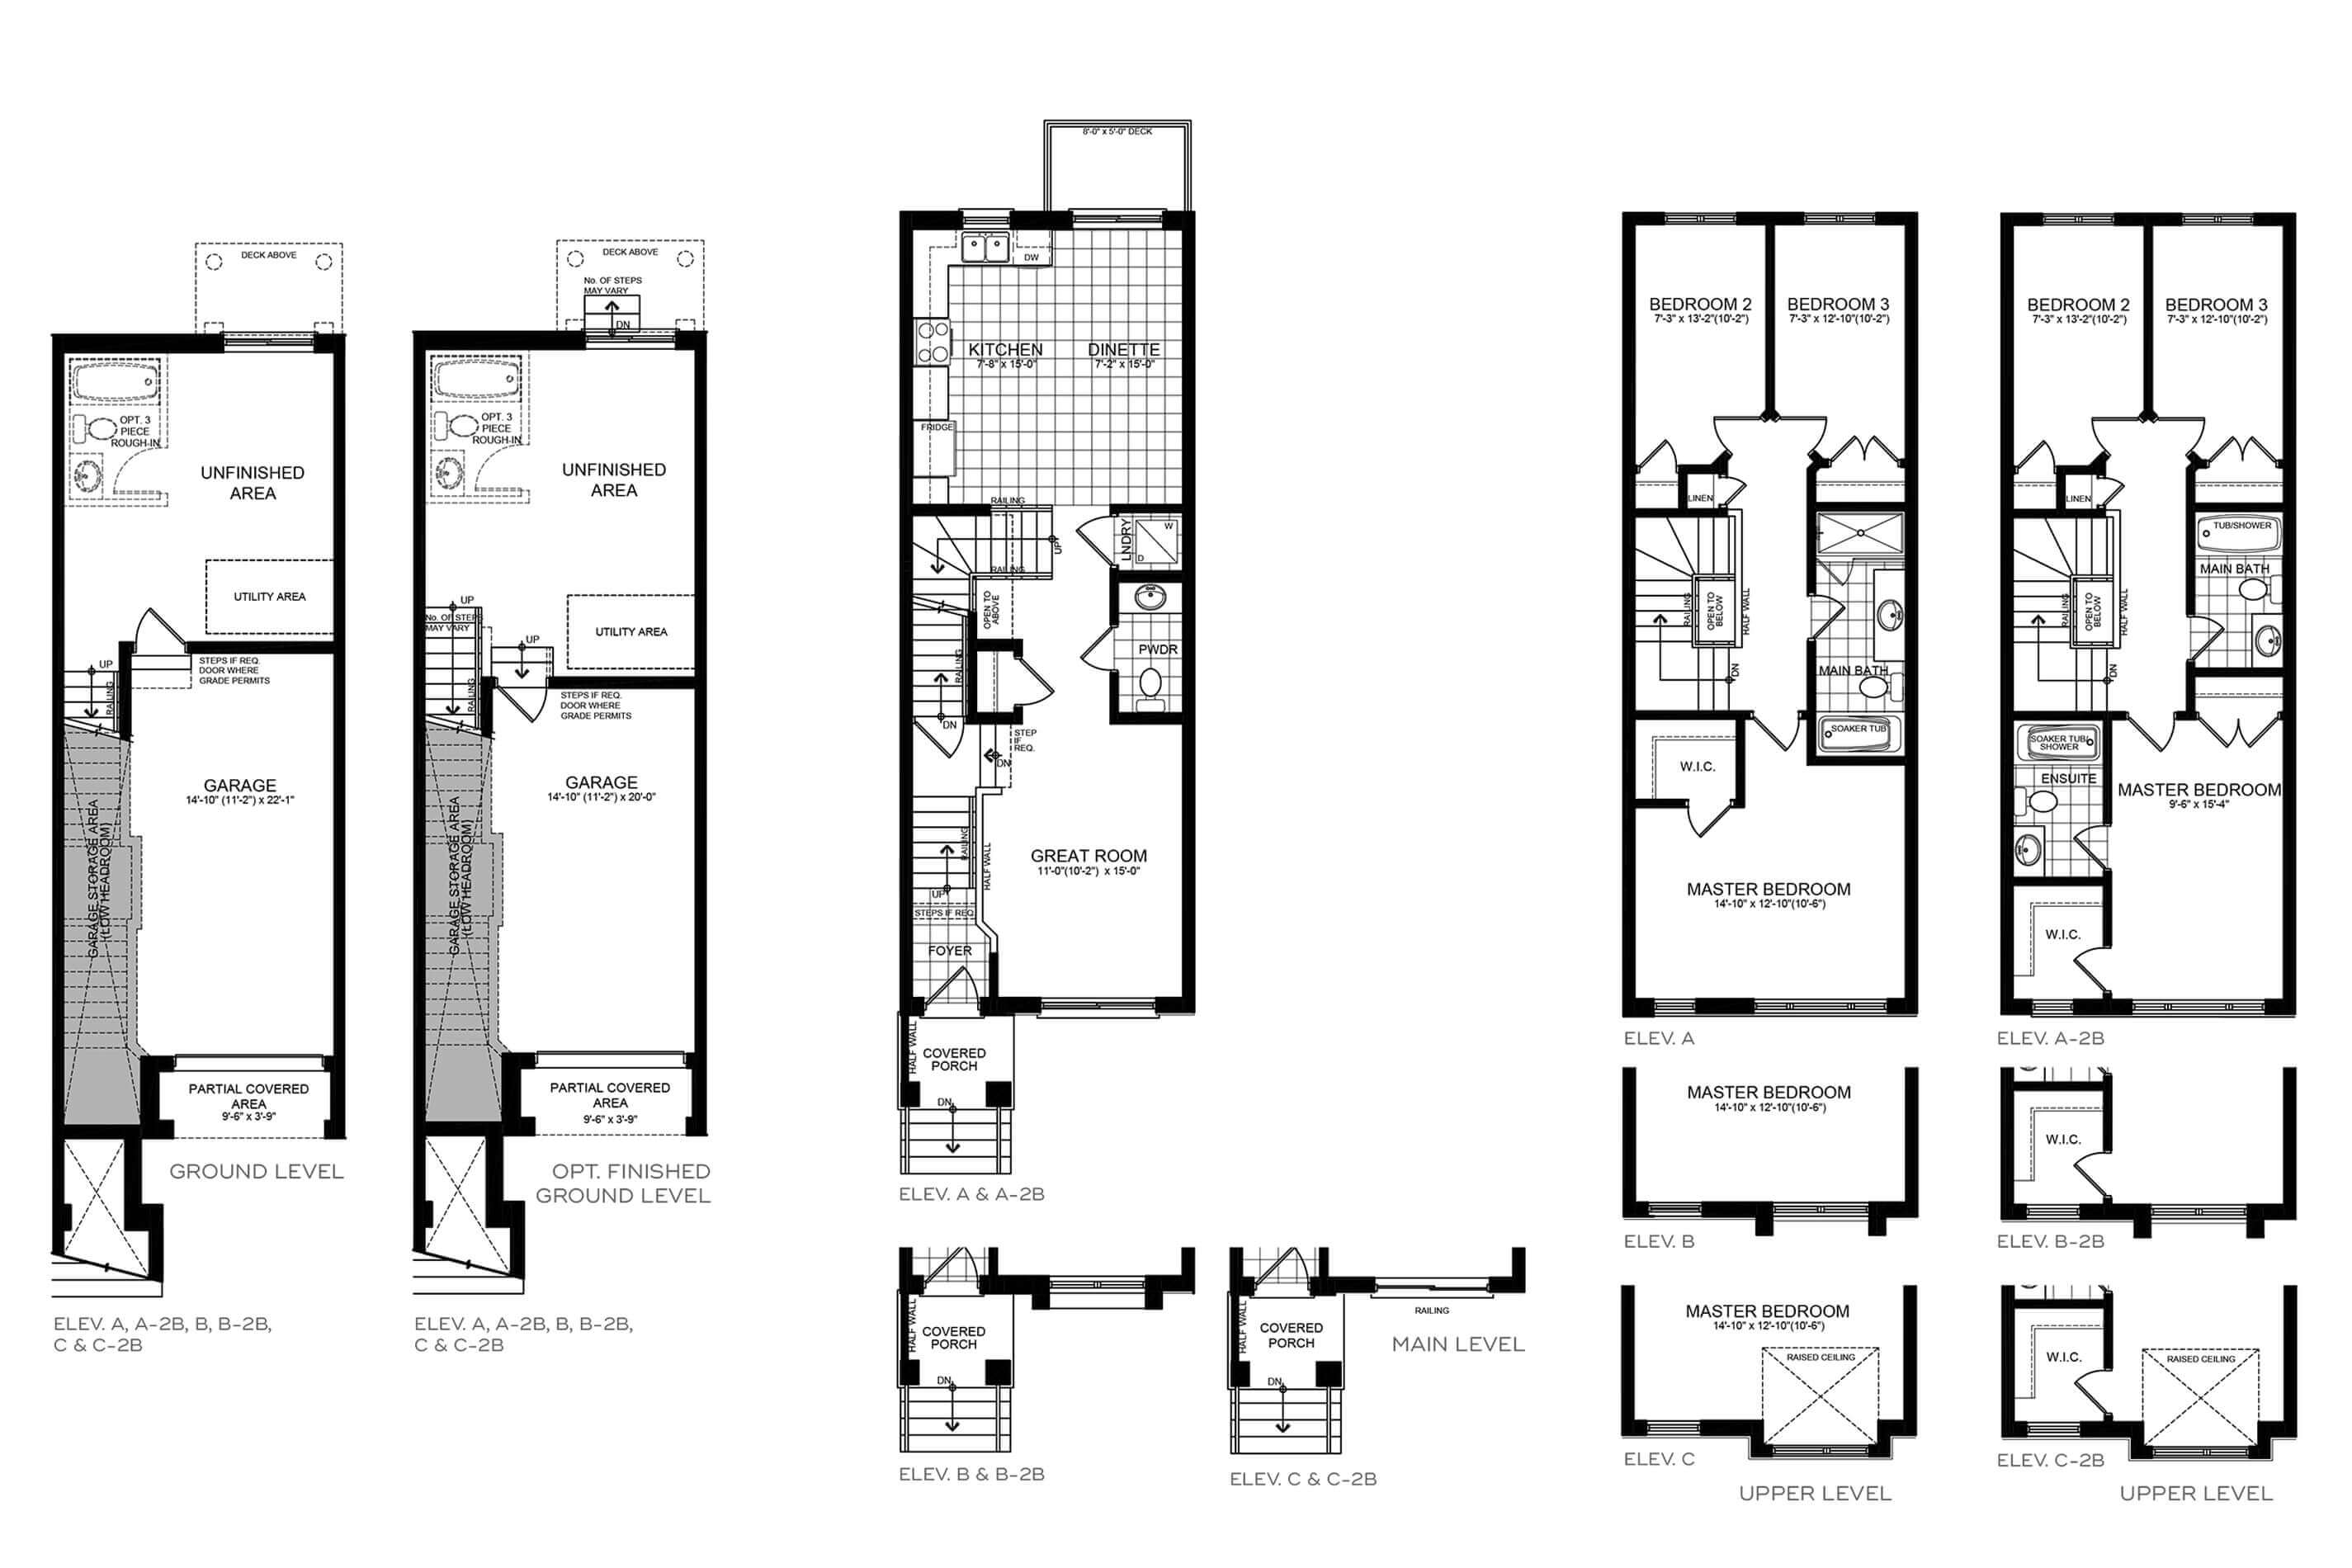  Shellard 2 (Interior) - B  Floor Plan of Sienna Woods Towns with undefined beds